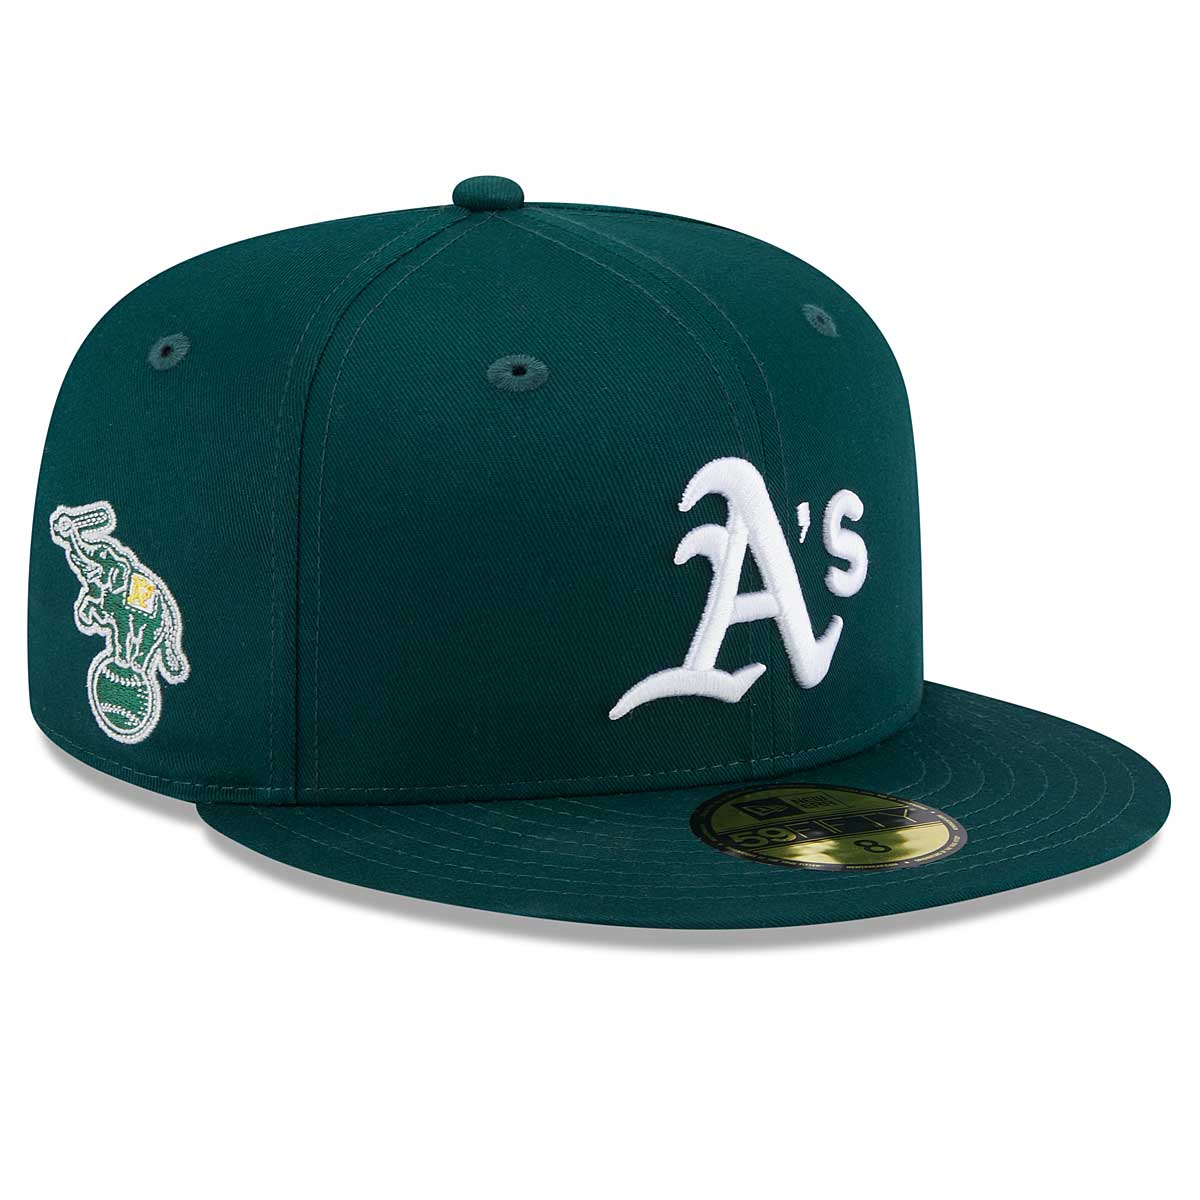 Image of New Era MLB Oakland Athletics Team Side Patch 59fifty Cap, Dark Green